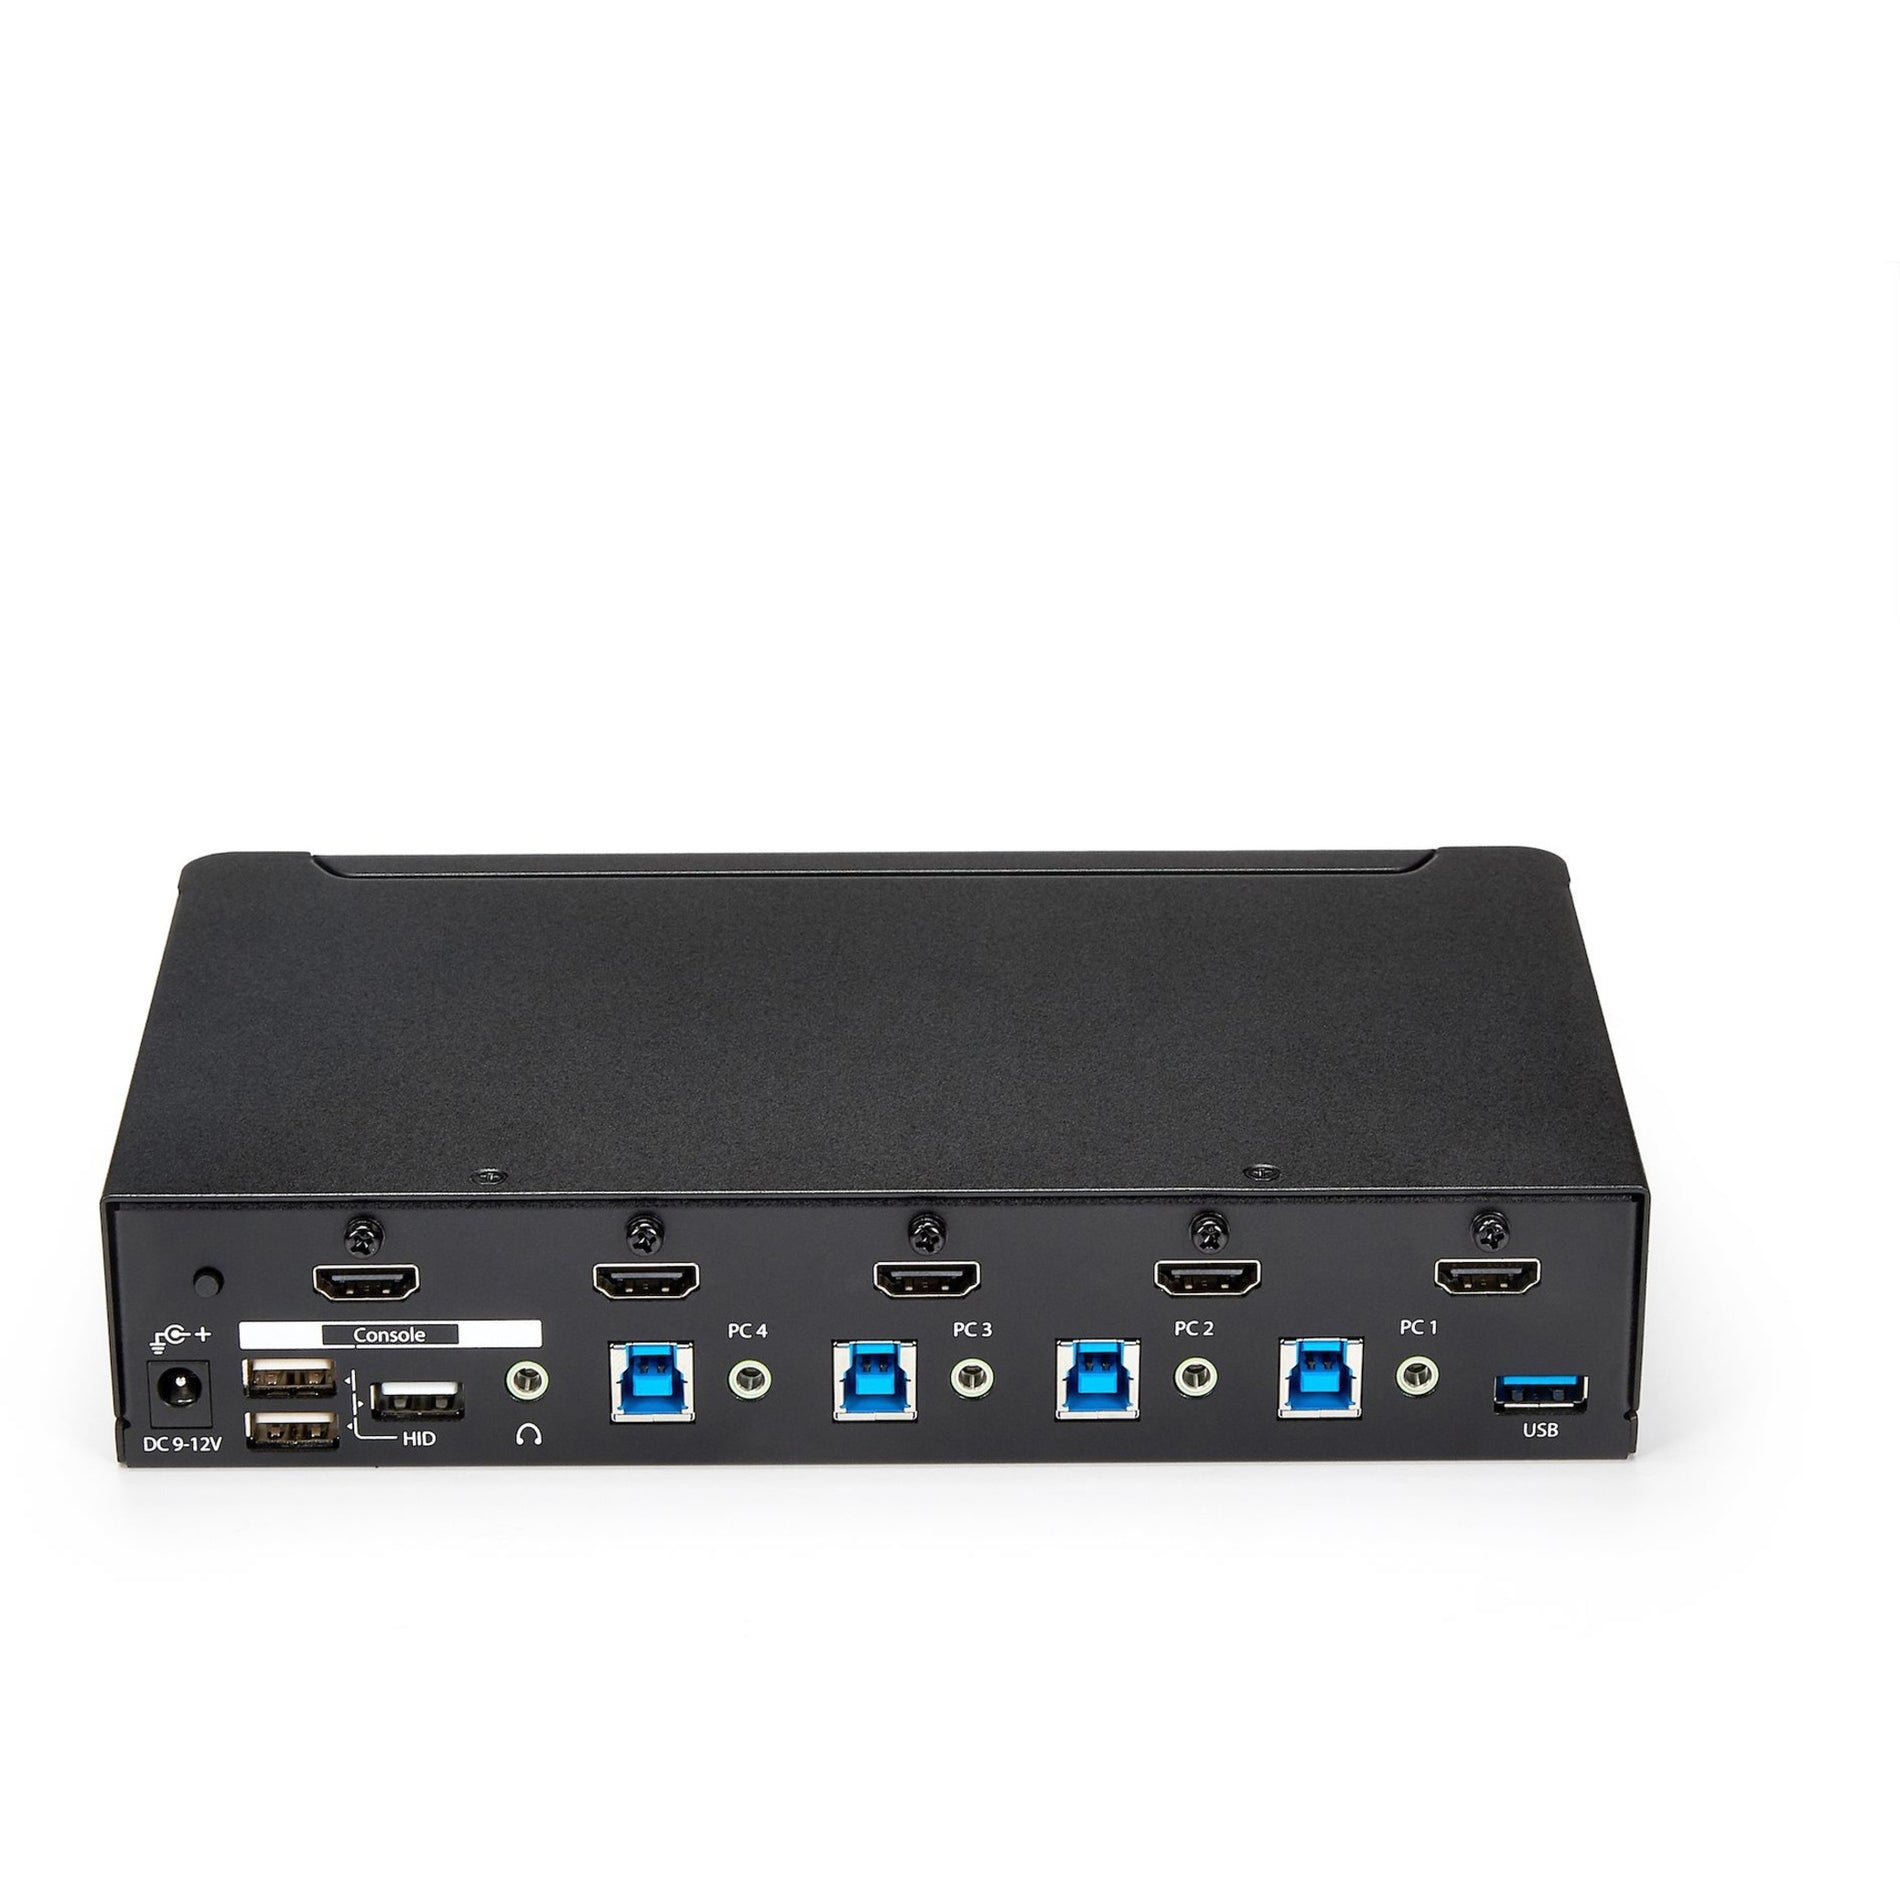 StarTech.com SV431HDU3A2 4-Port HDMI KVM Switch - Built-in USB 3.0 Hub, 1080p